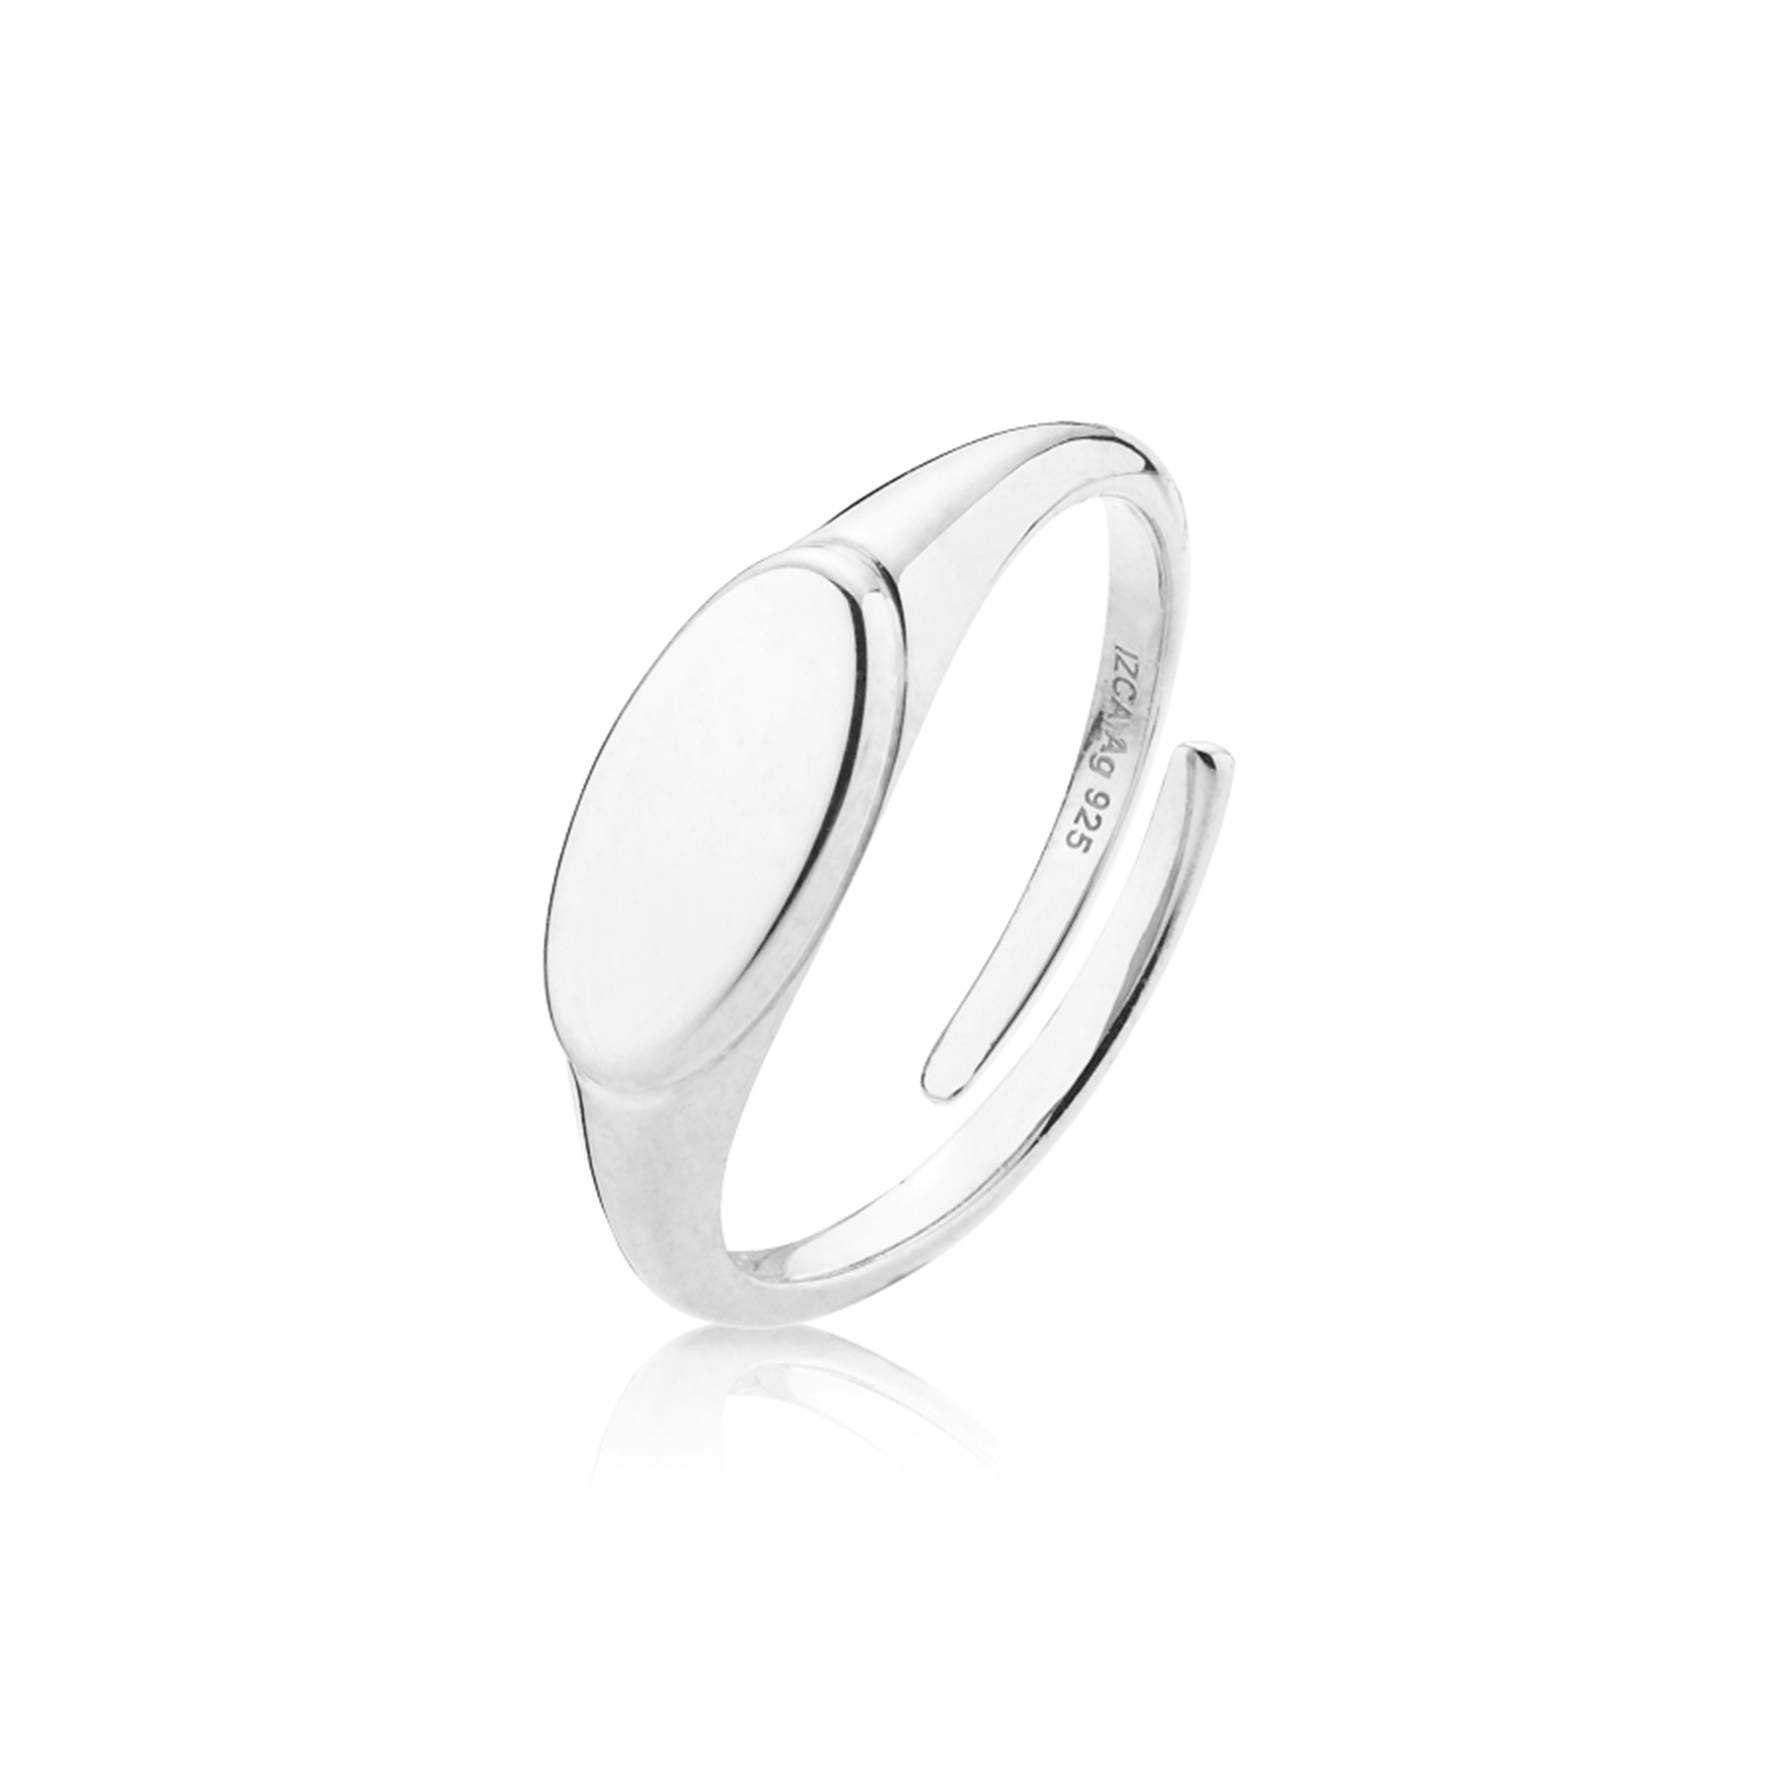 Fam Ring from Sistie in Silver Sterling 925|Blank